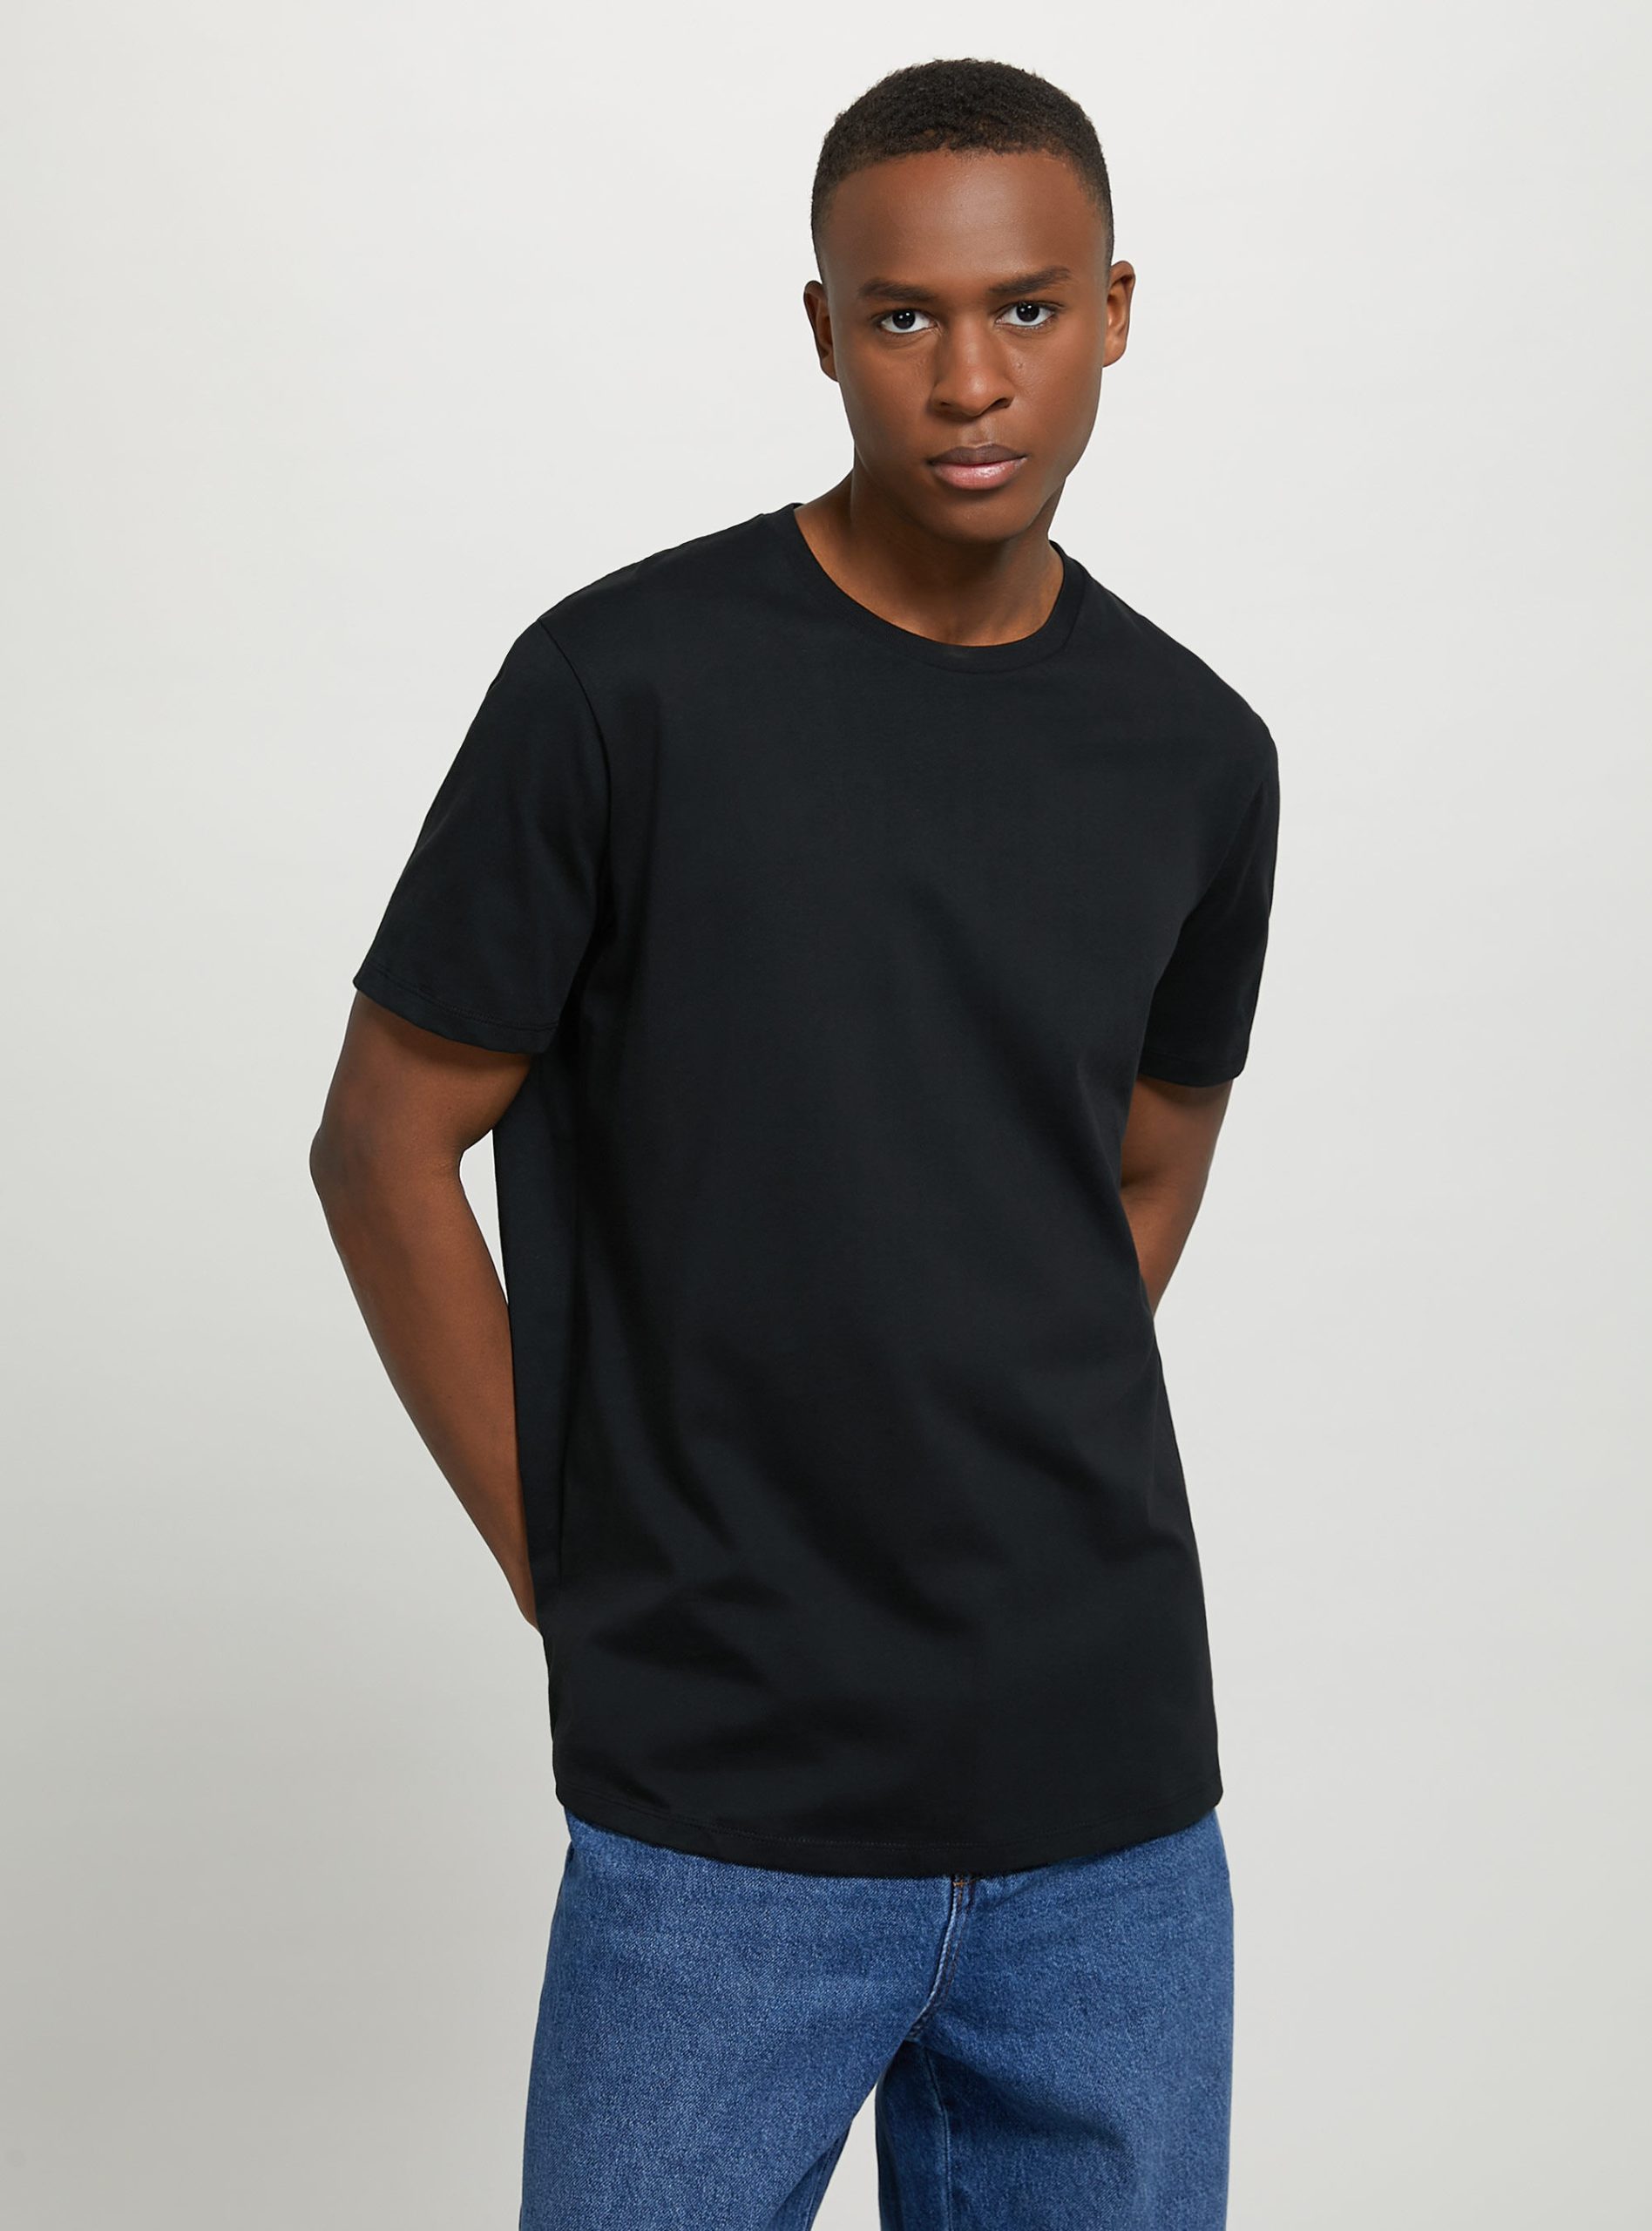 Alcott Material Bk1 Black T-Shirts Männer Cotton Crew-Neck T-Shirt – 1